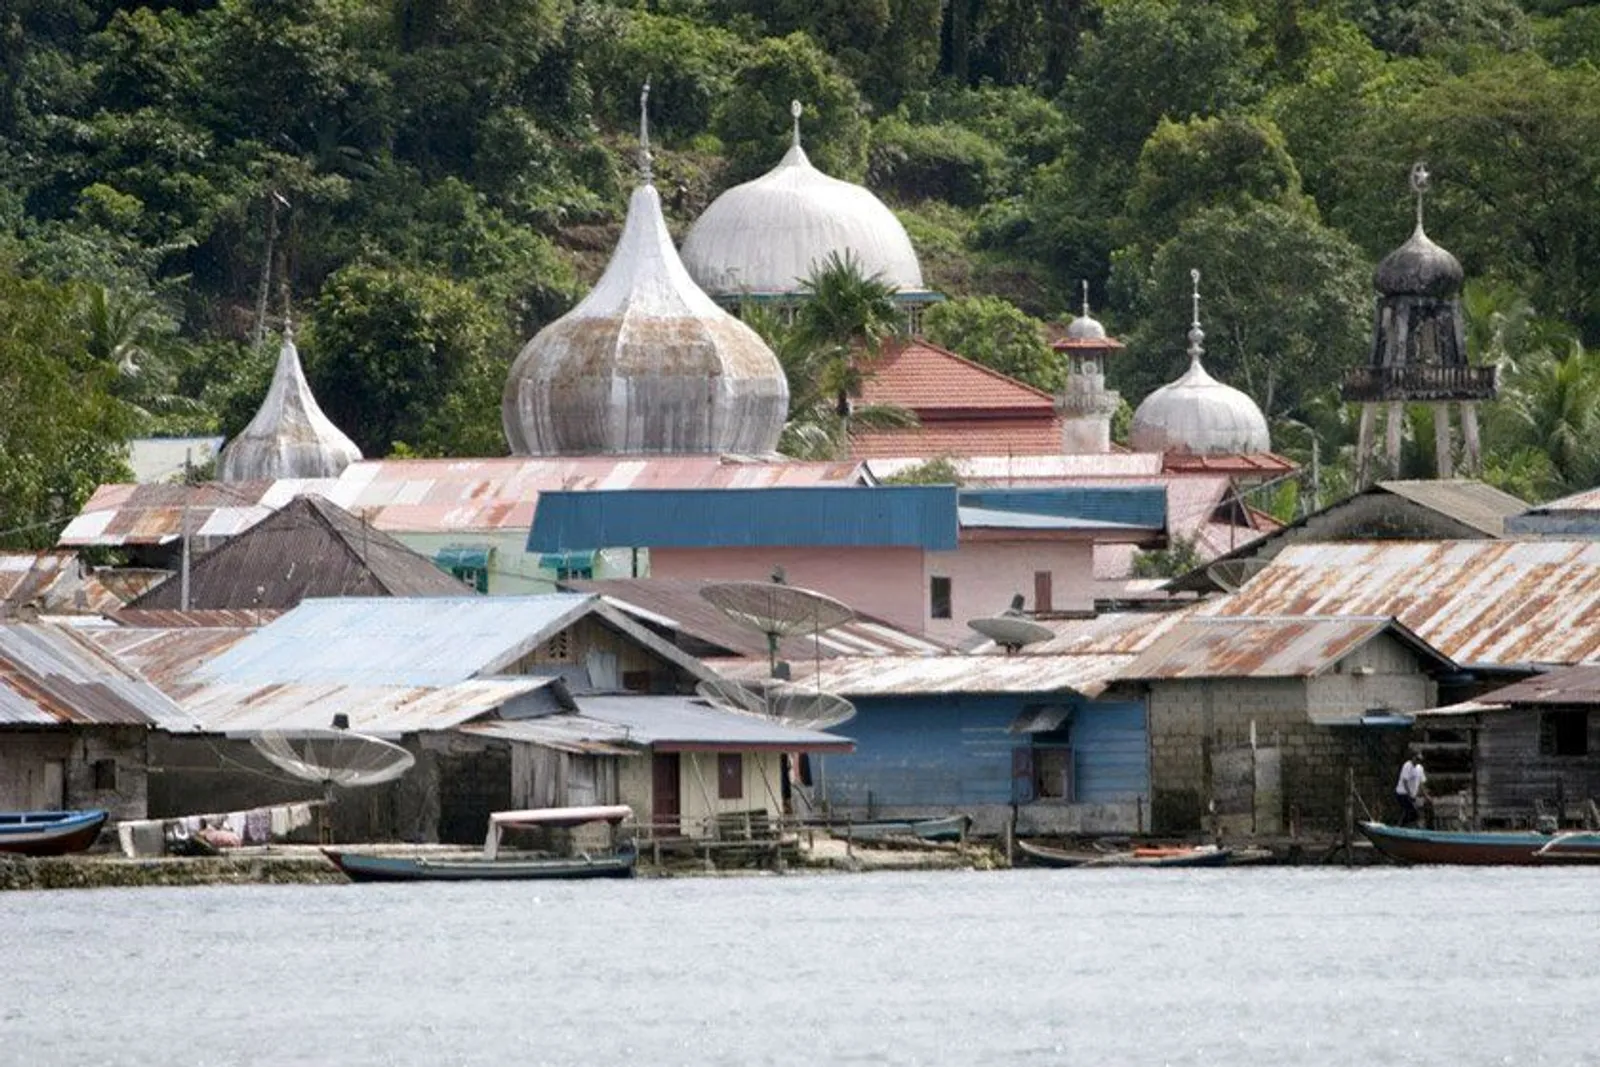 7 Pulau Indah di Sumatera Barat Ini Bikin Lupa kalau Lagi di Indonesia